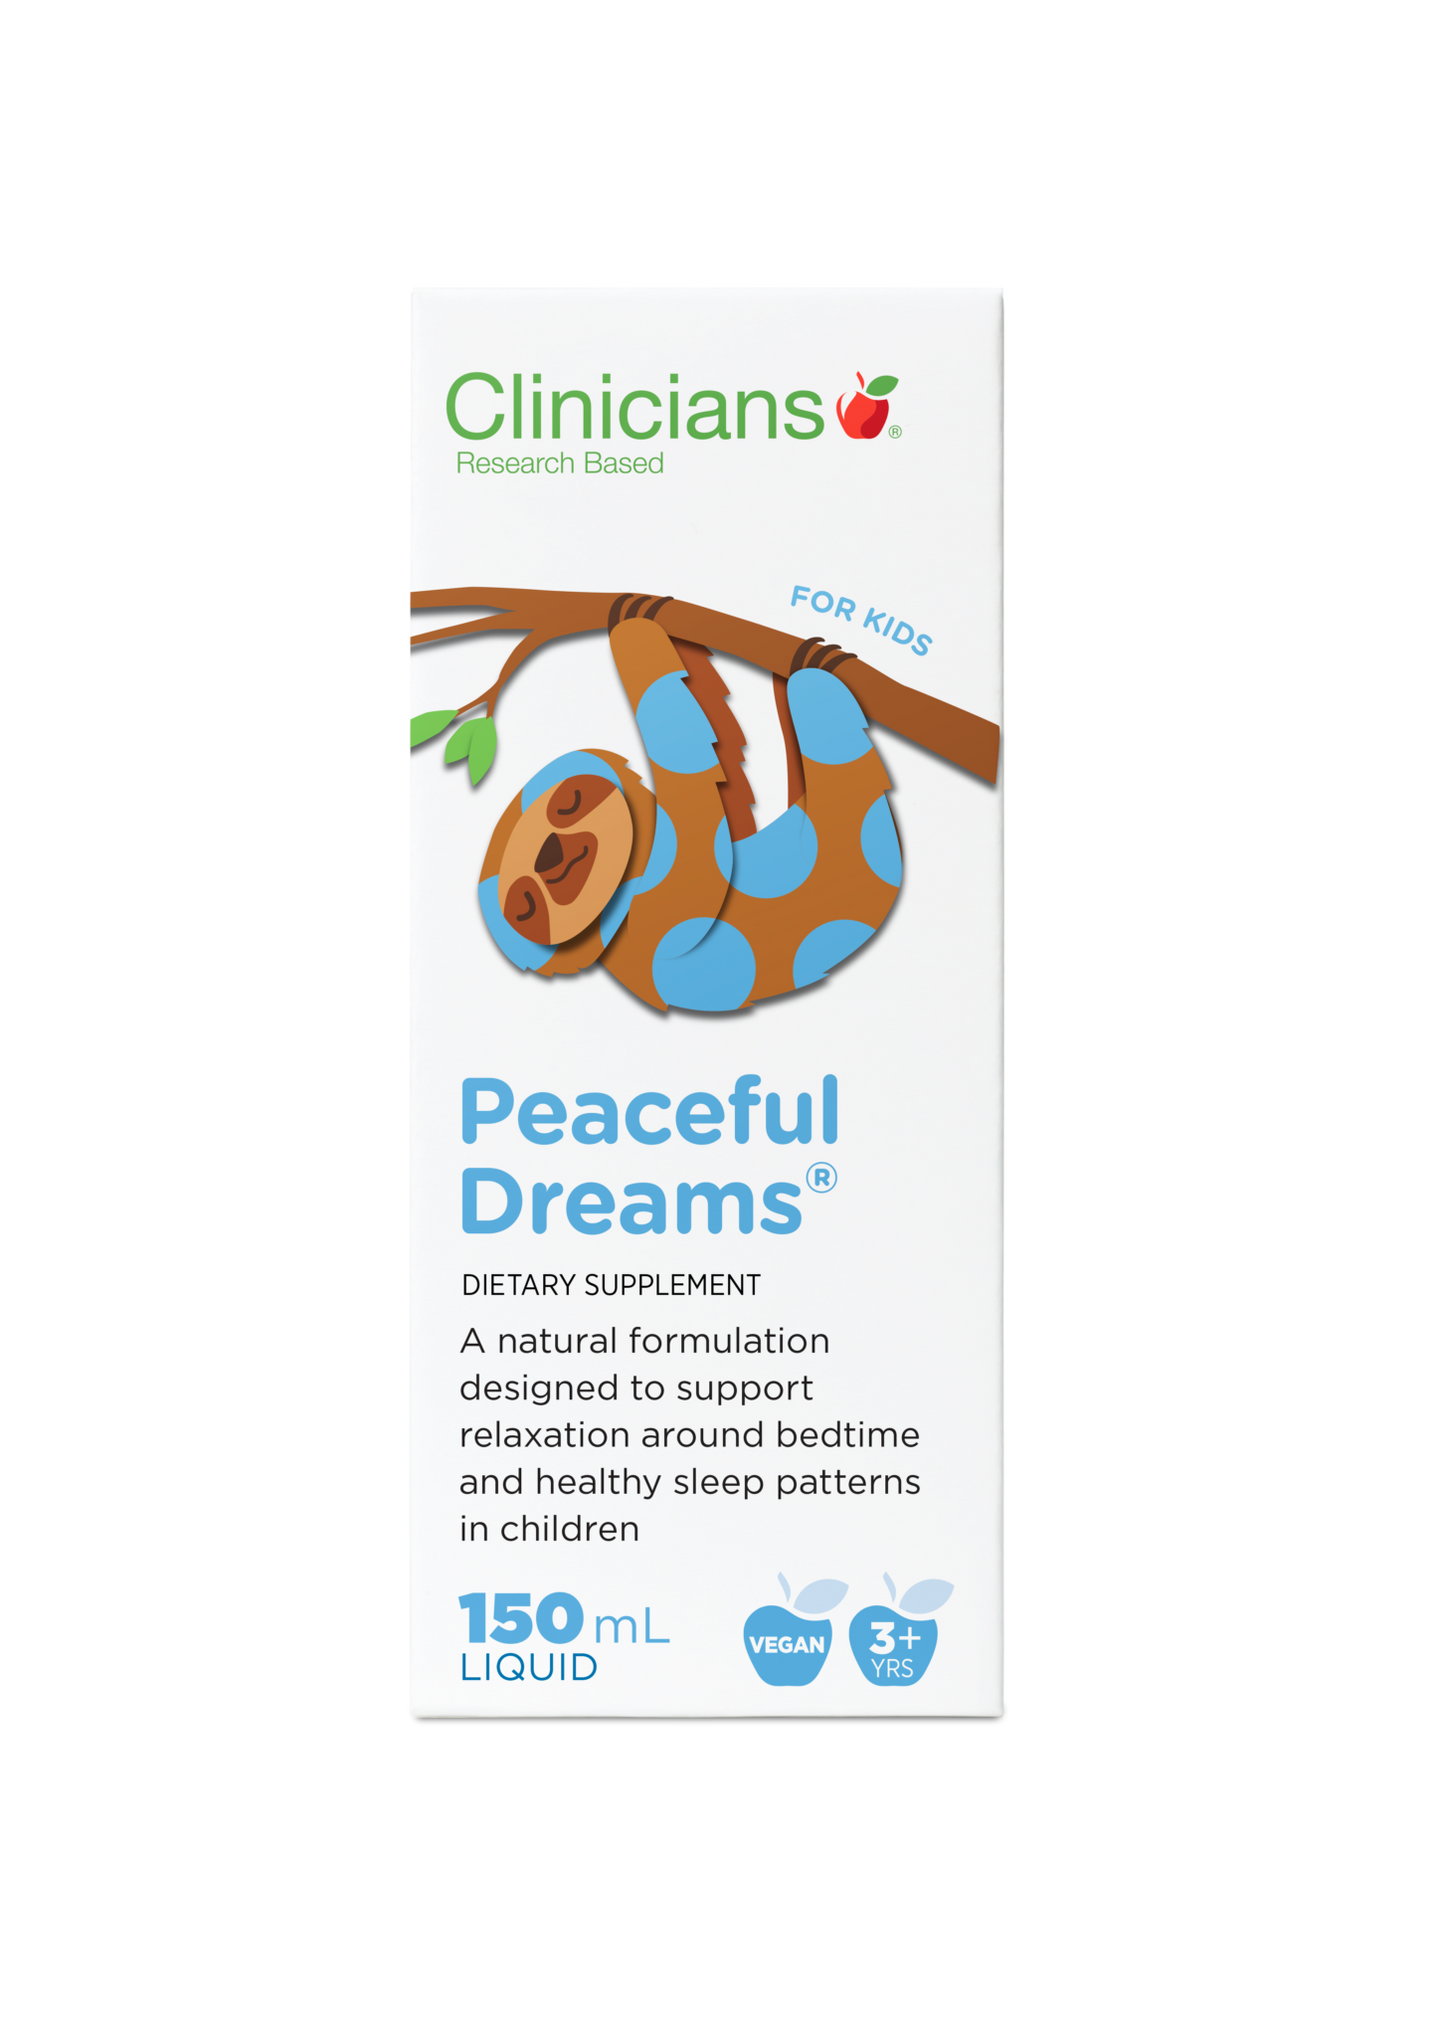 Clinicians Kids Peaceful Dreams 150ml